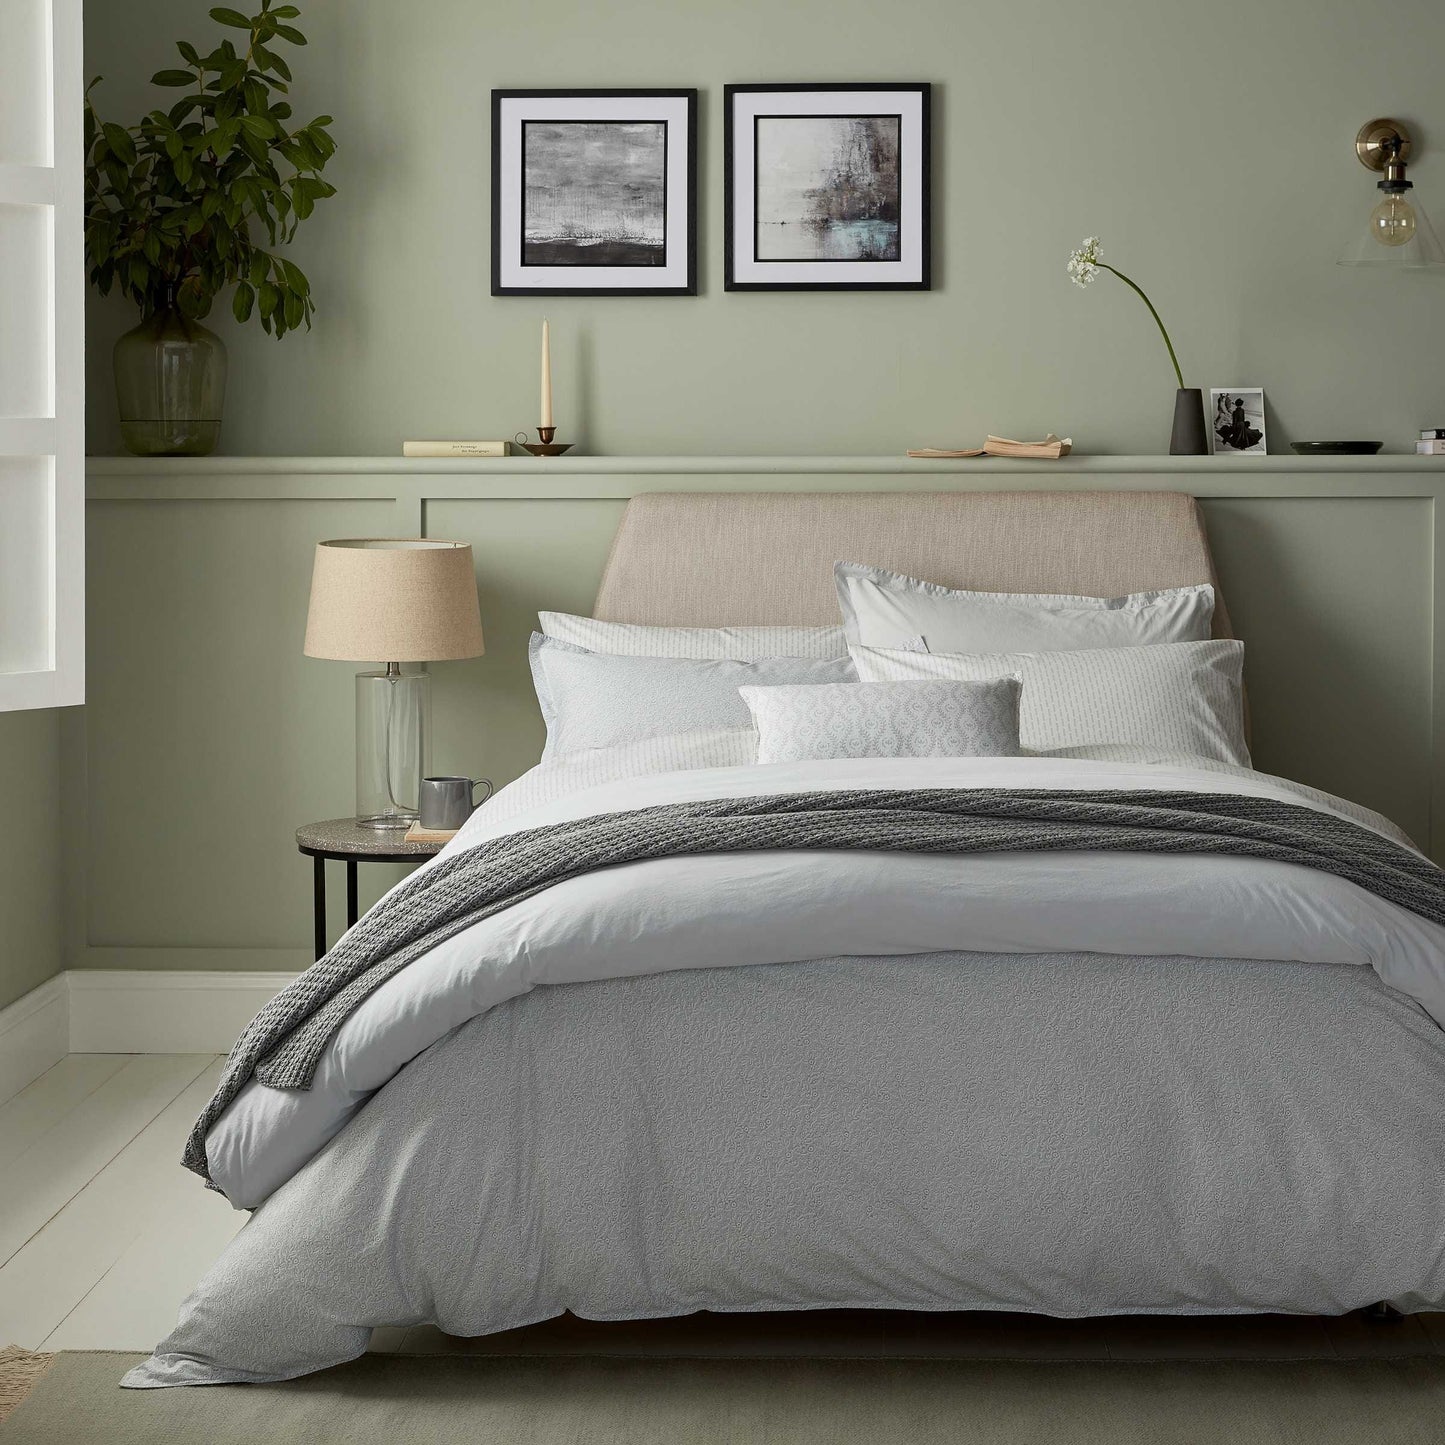 Luxury Grey Floral Bedding by Murmur